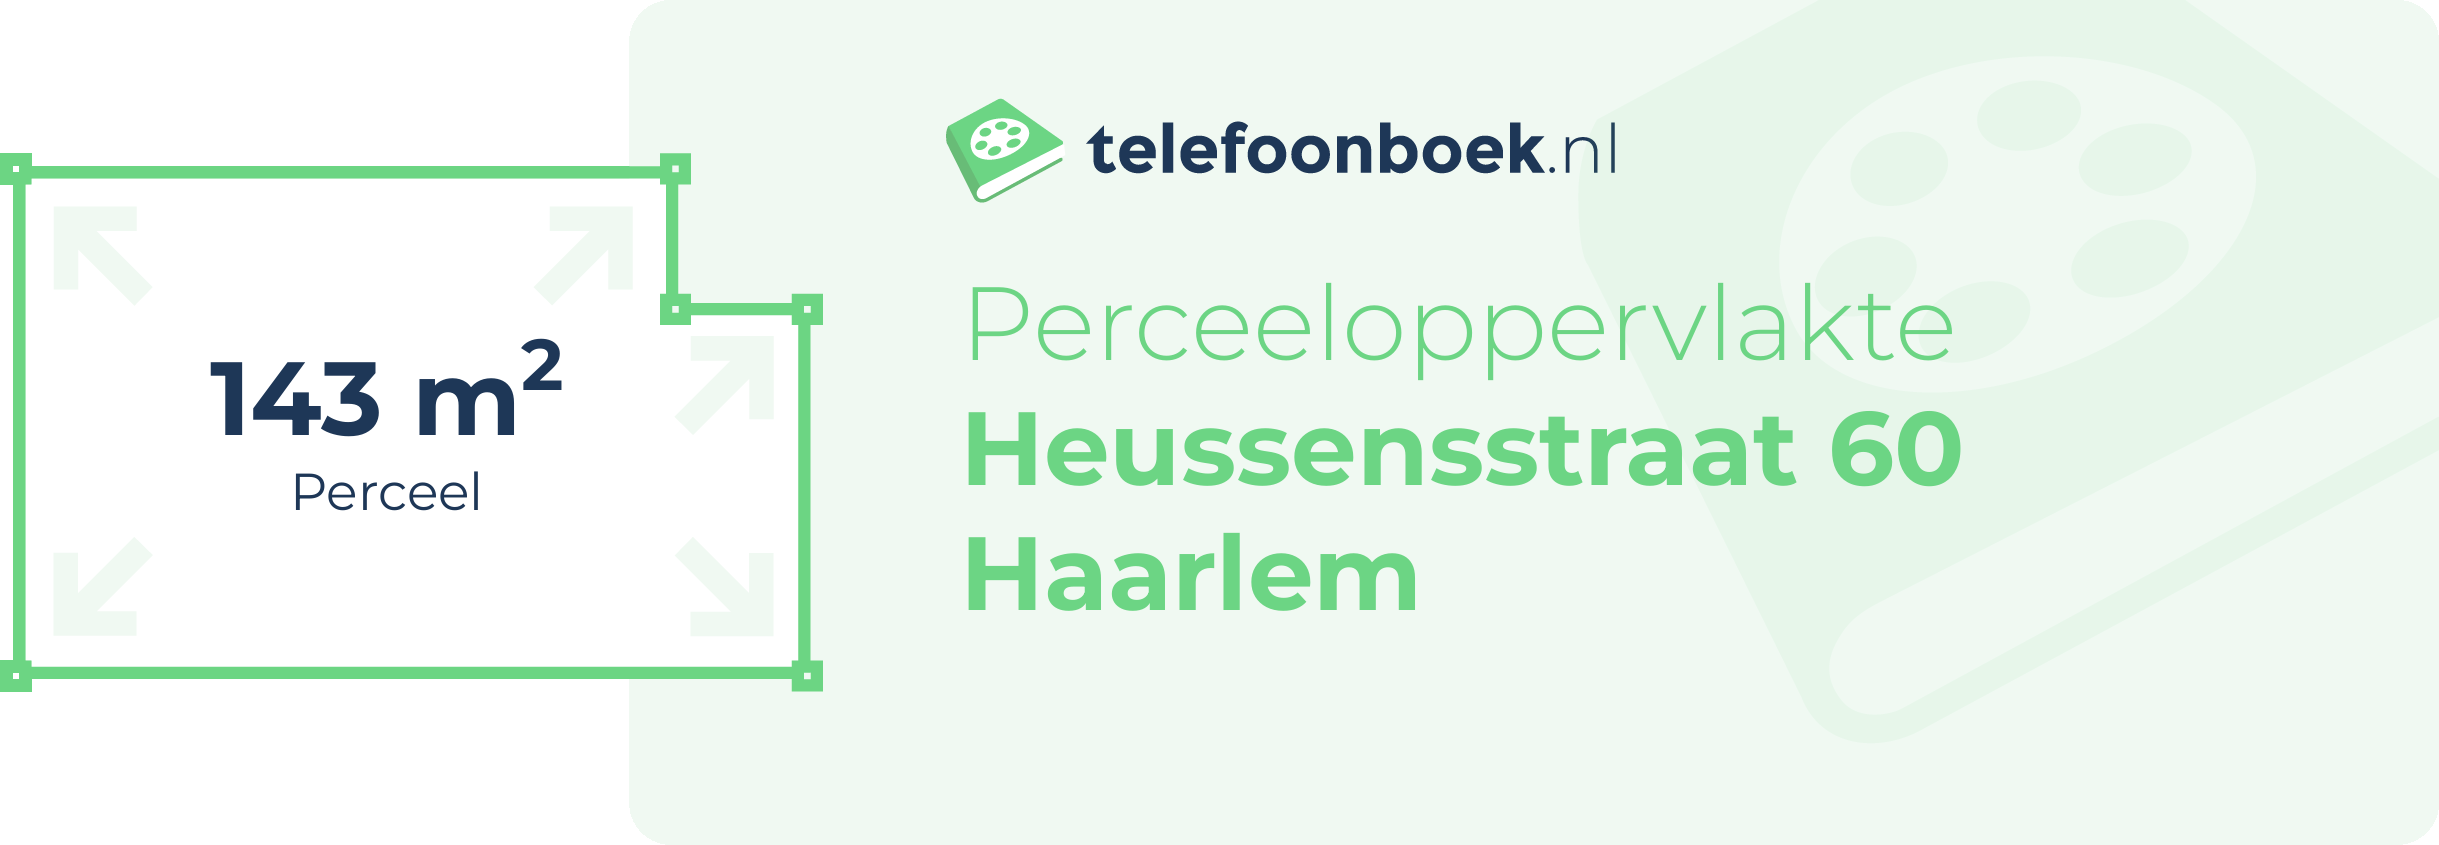 Perceeloppervlakte Heussensstraat 60 Haarlem